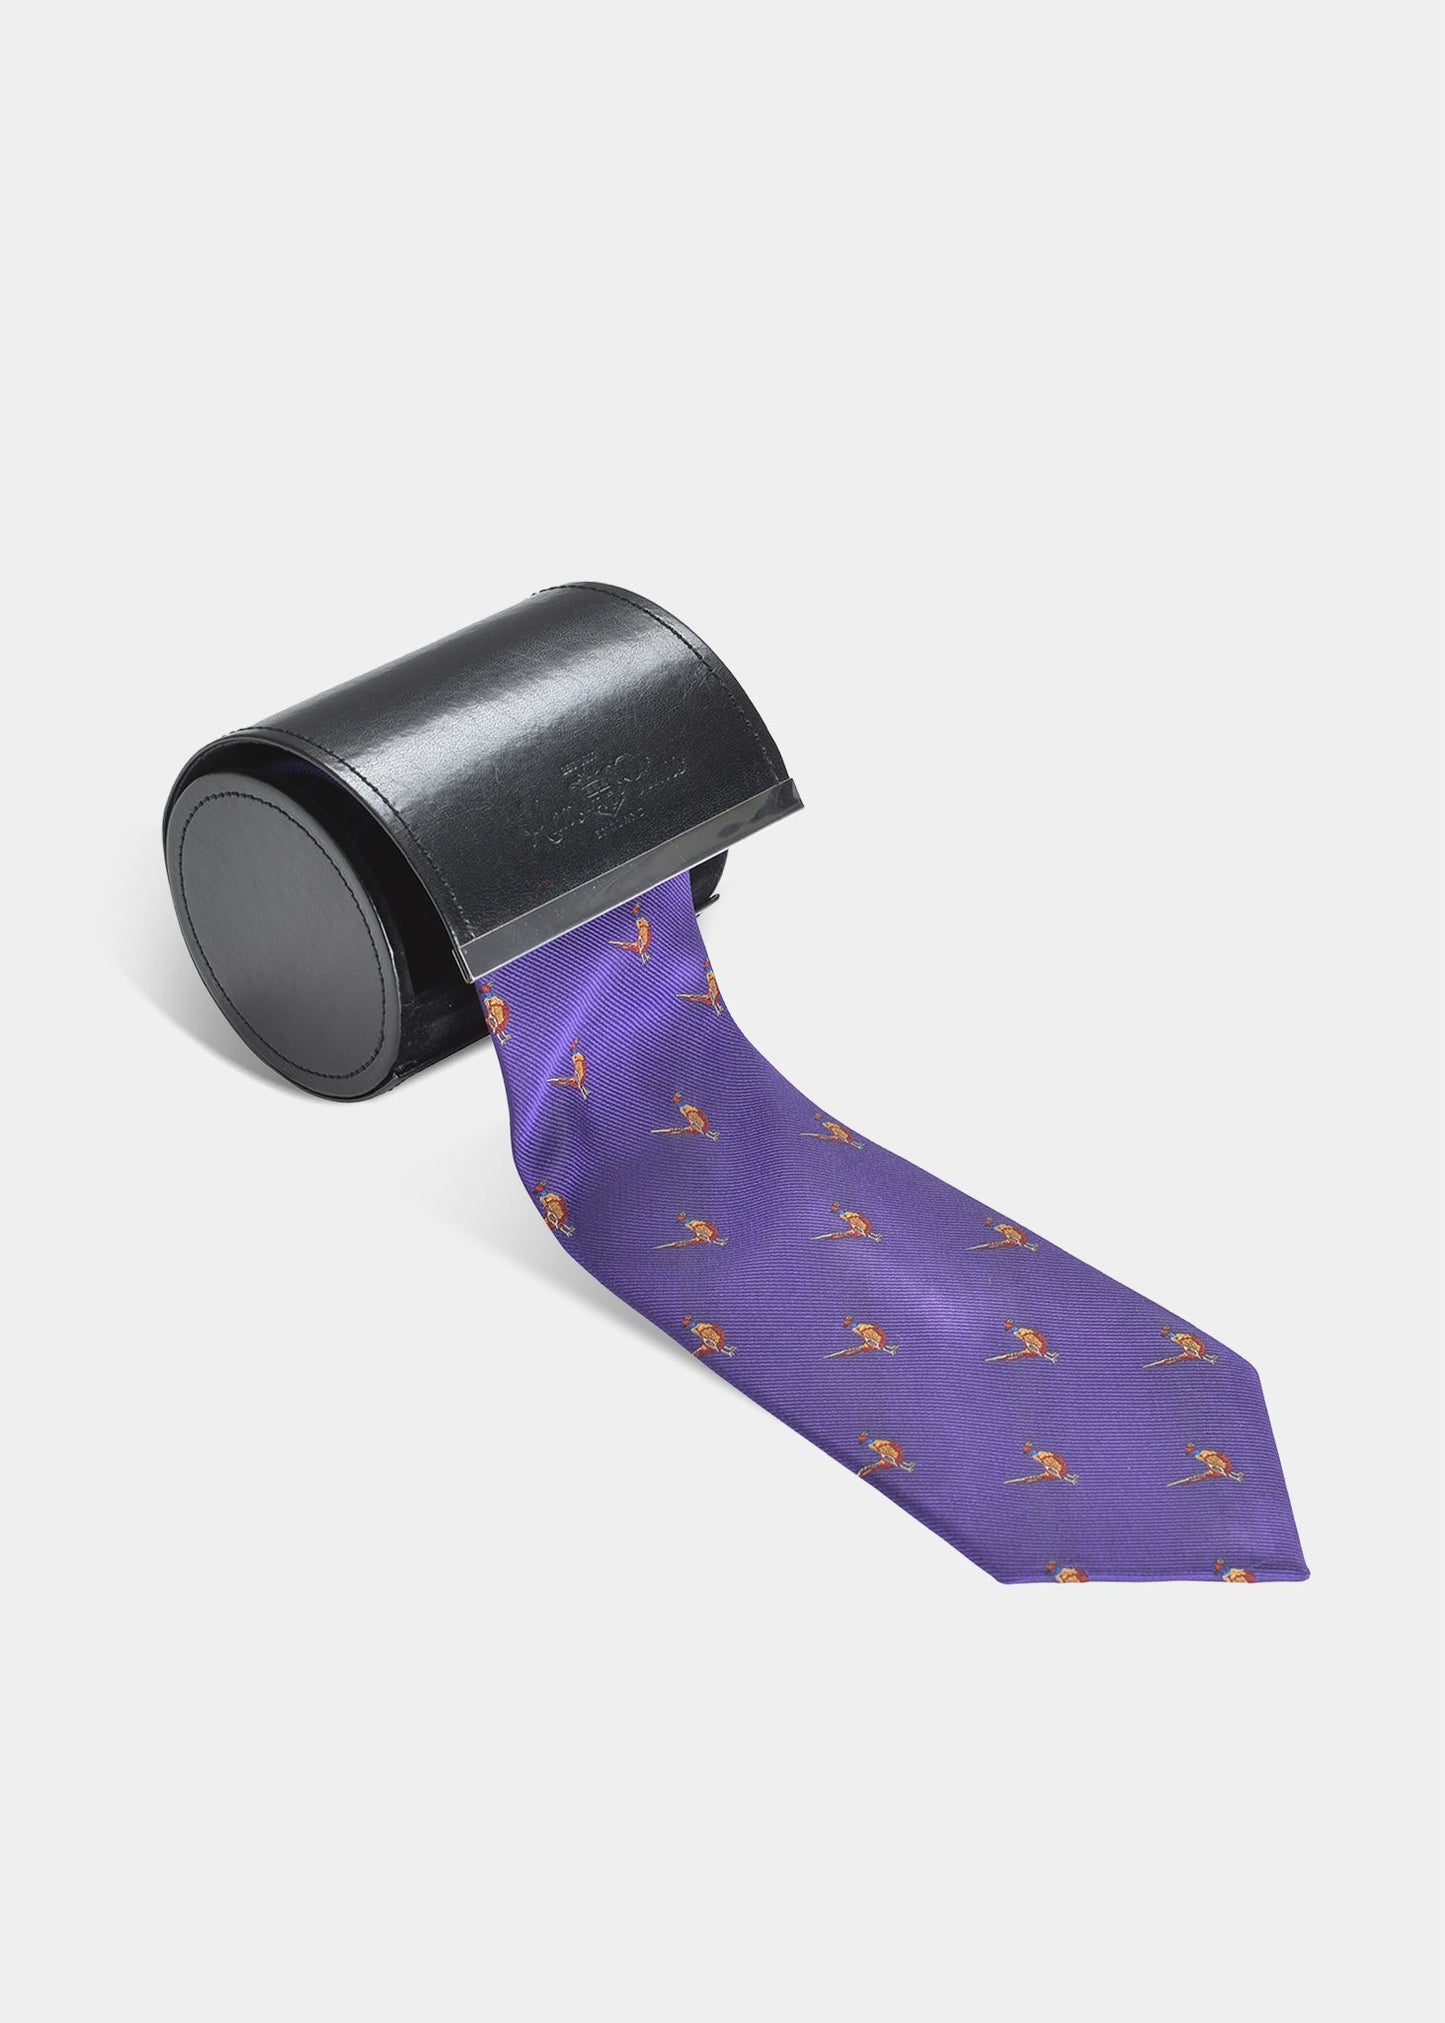 mens-ripon-silk-country-tie-standing-pheasant-design-purple